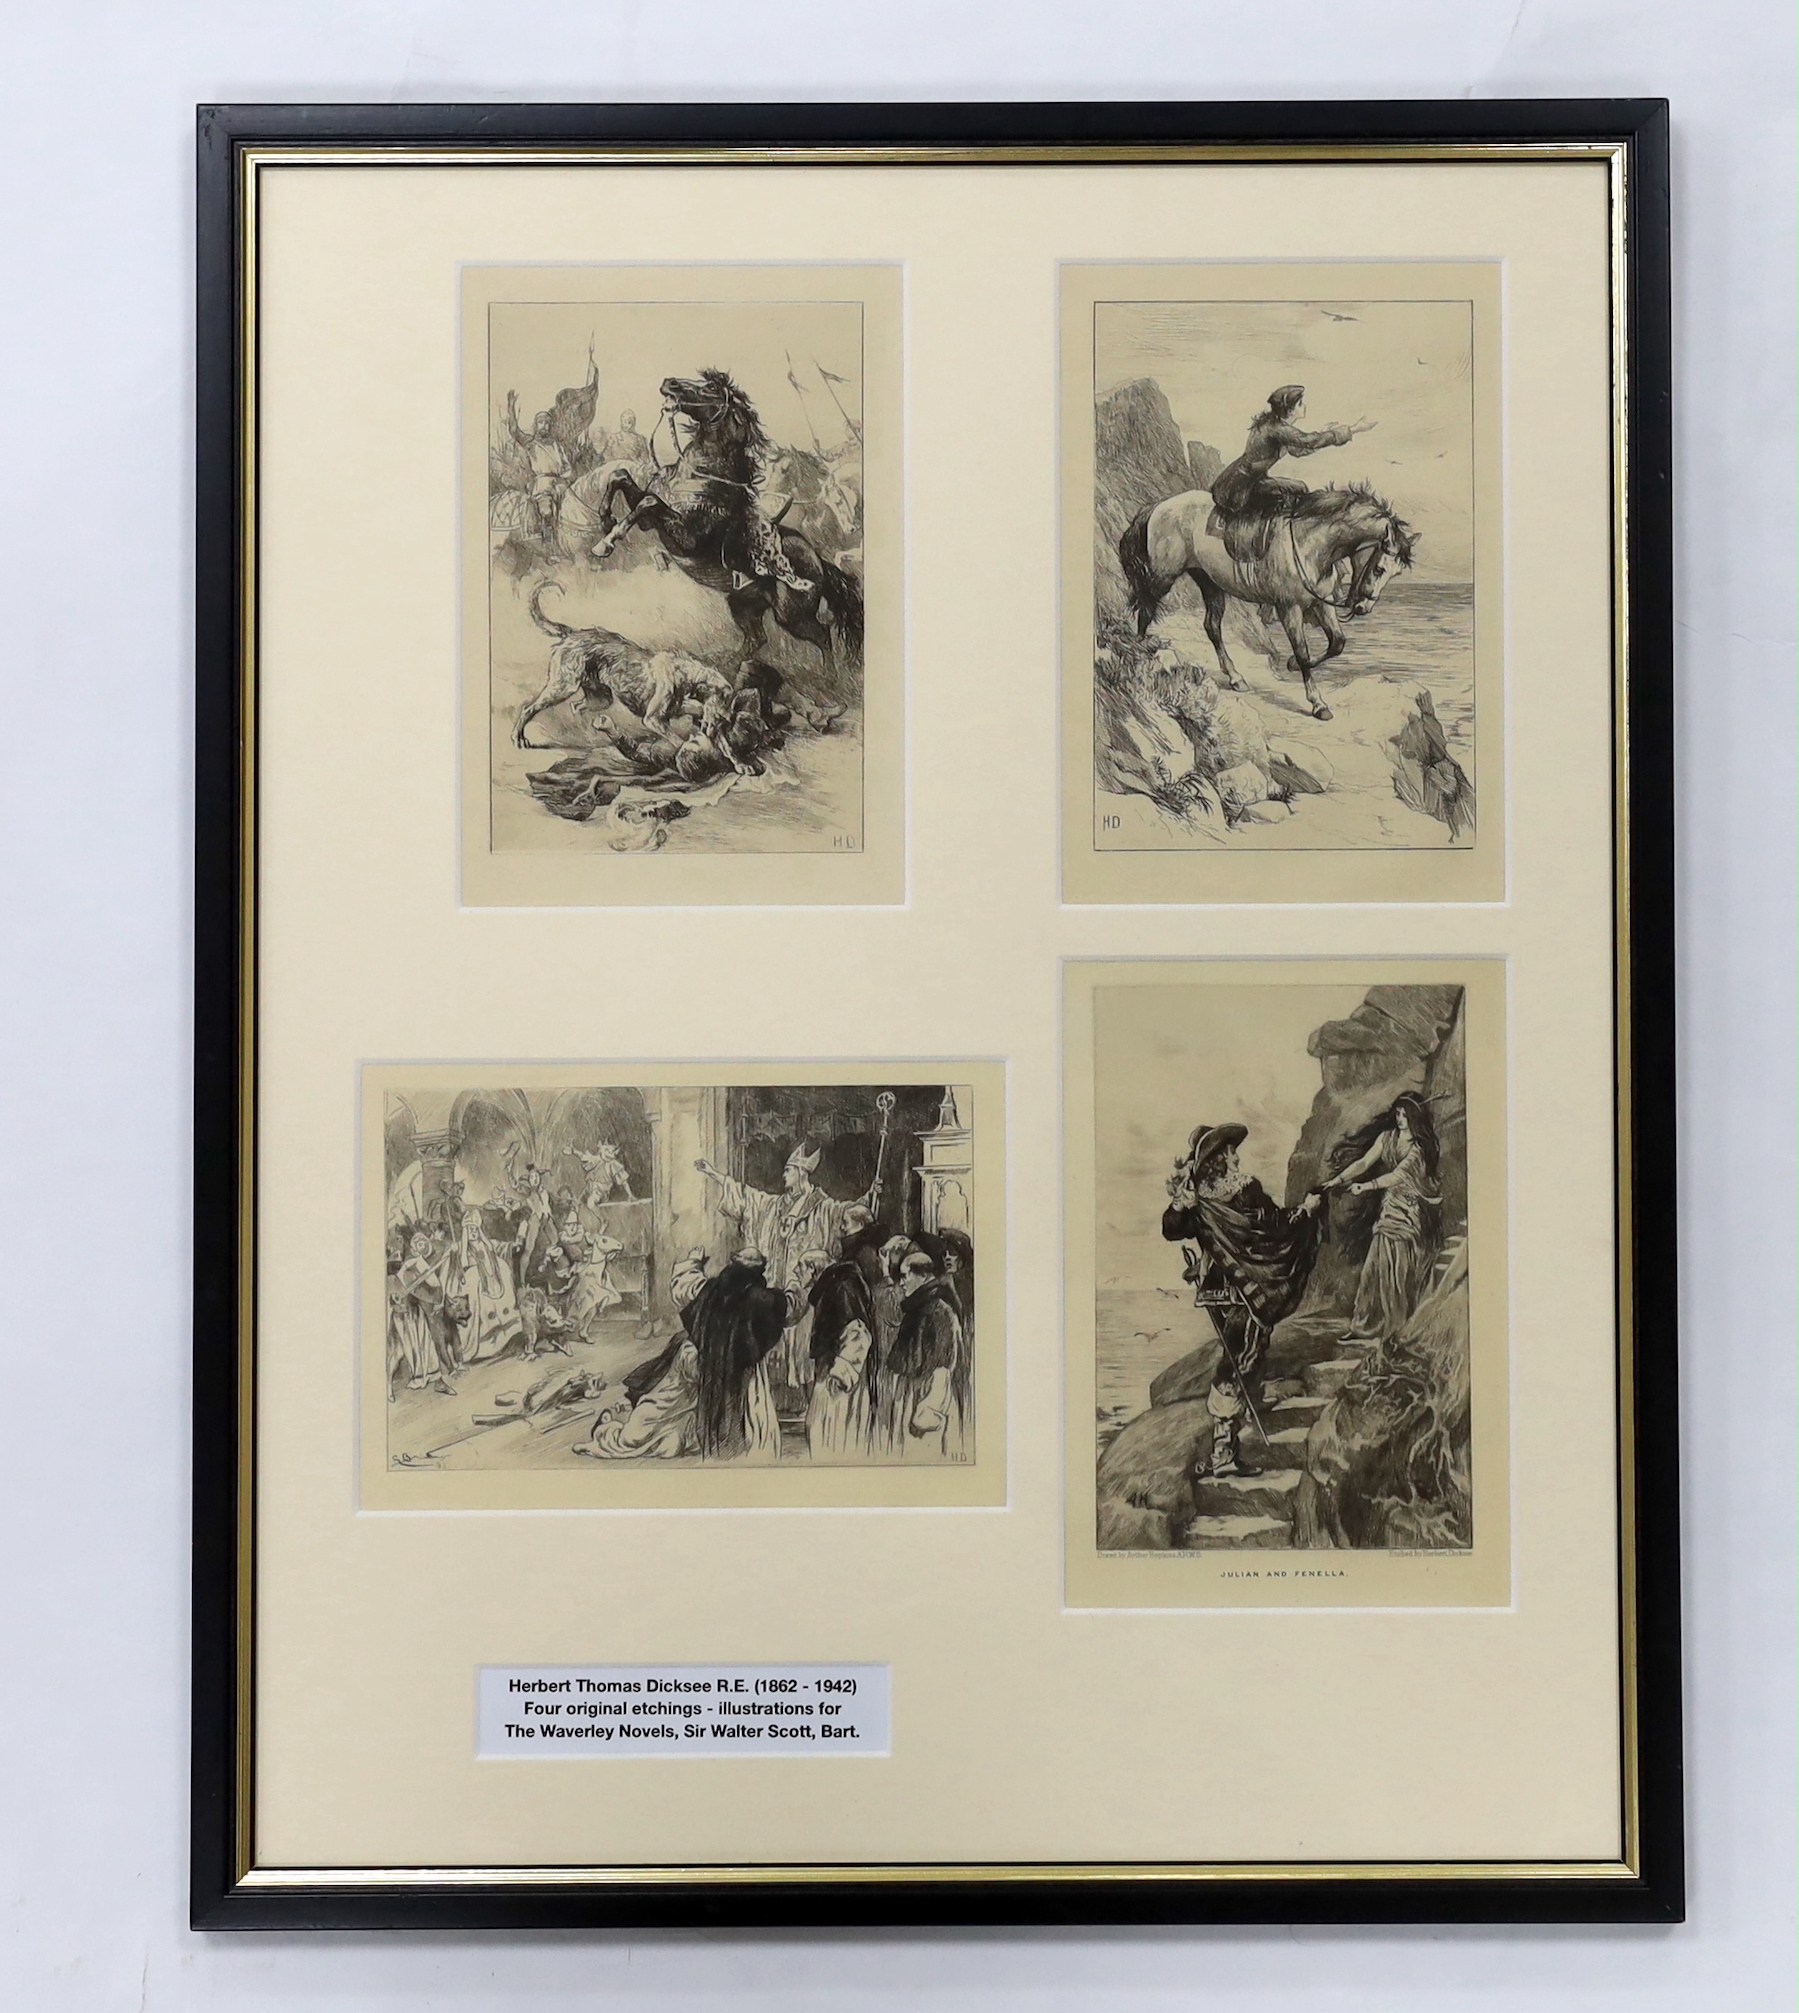 Herbert Dicksee (1862-1942), four etchings, Illustrations for the Waverley Novels. Sir Walter Scott, framed as one, each 16 x 10.5cm